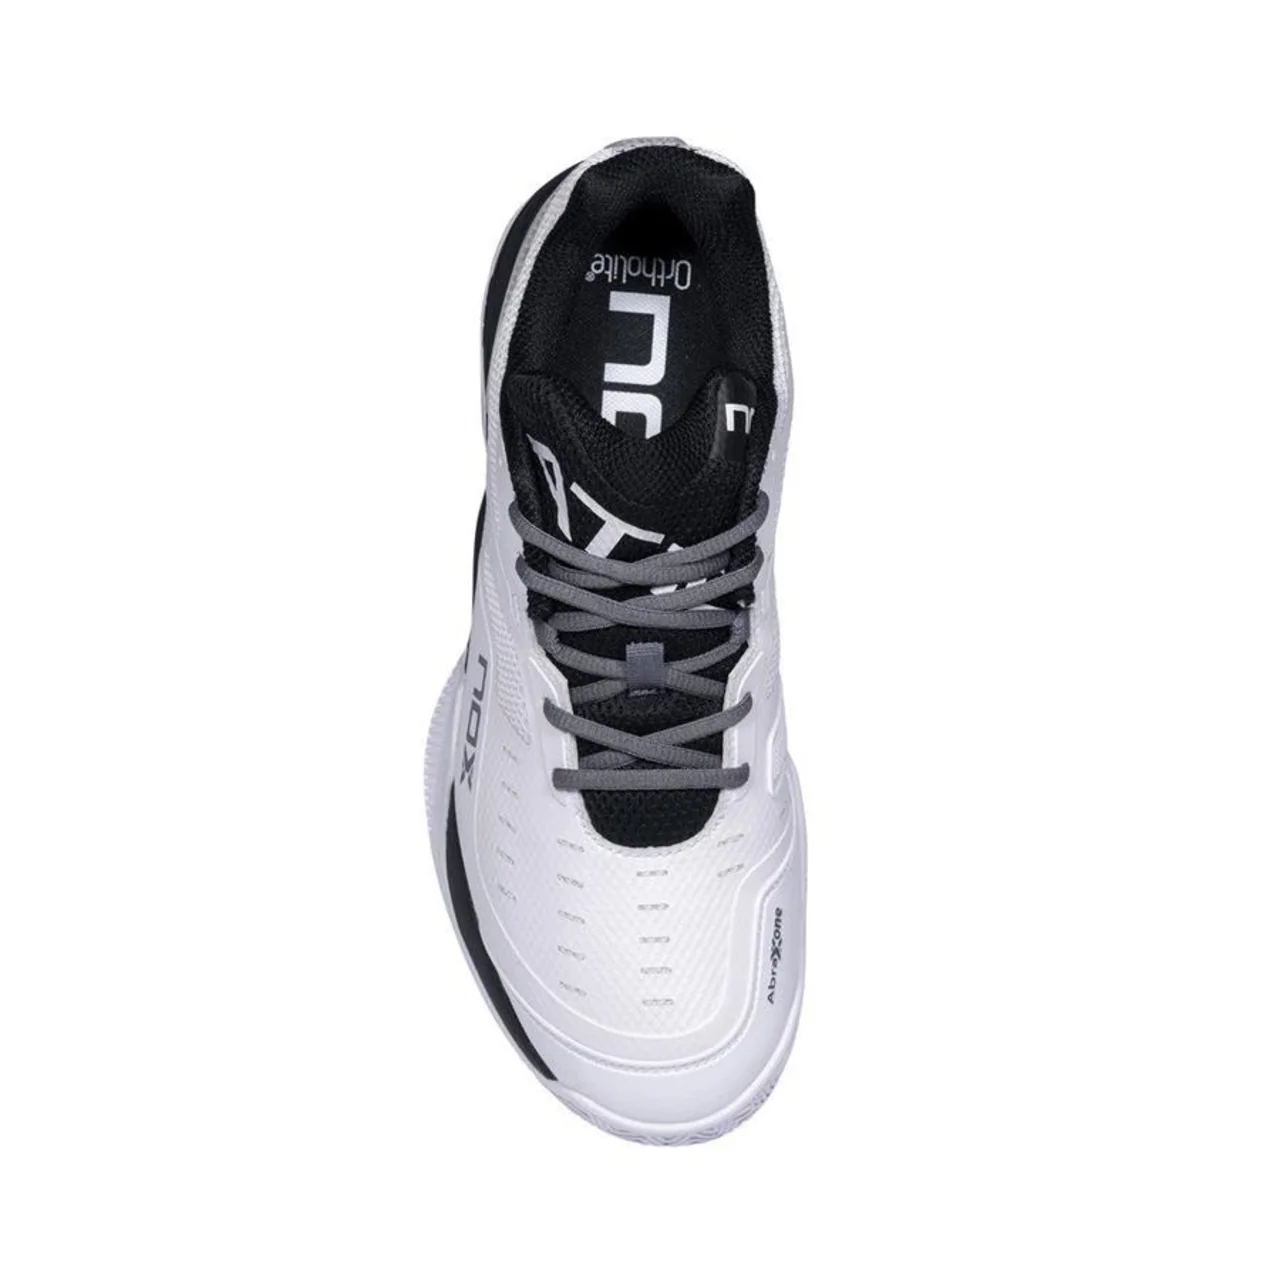 Nox Padel Shoes AT10 White/Black